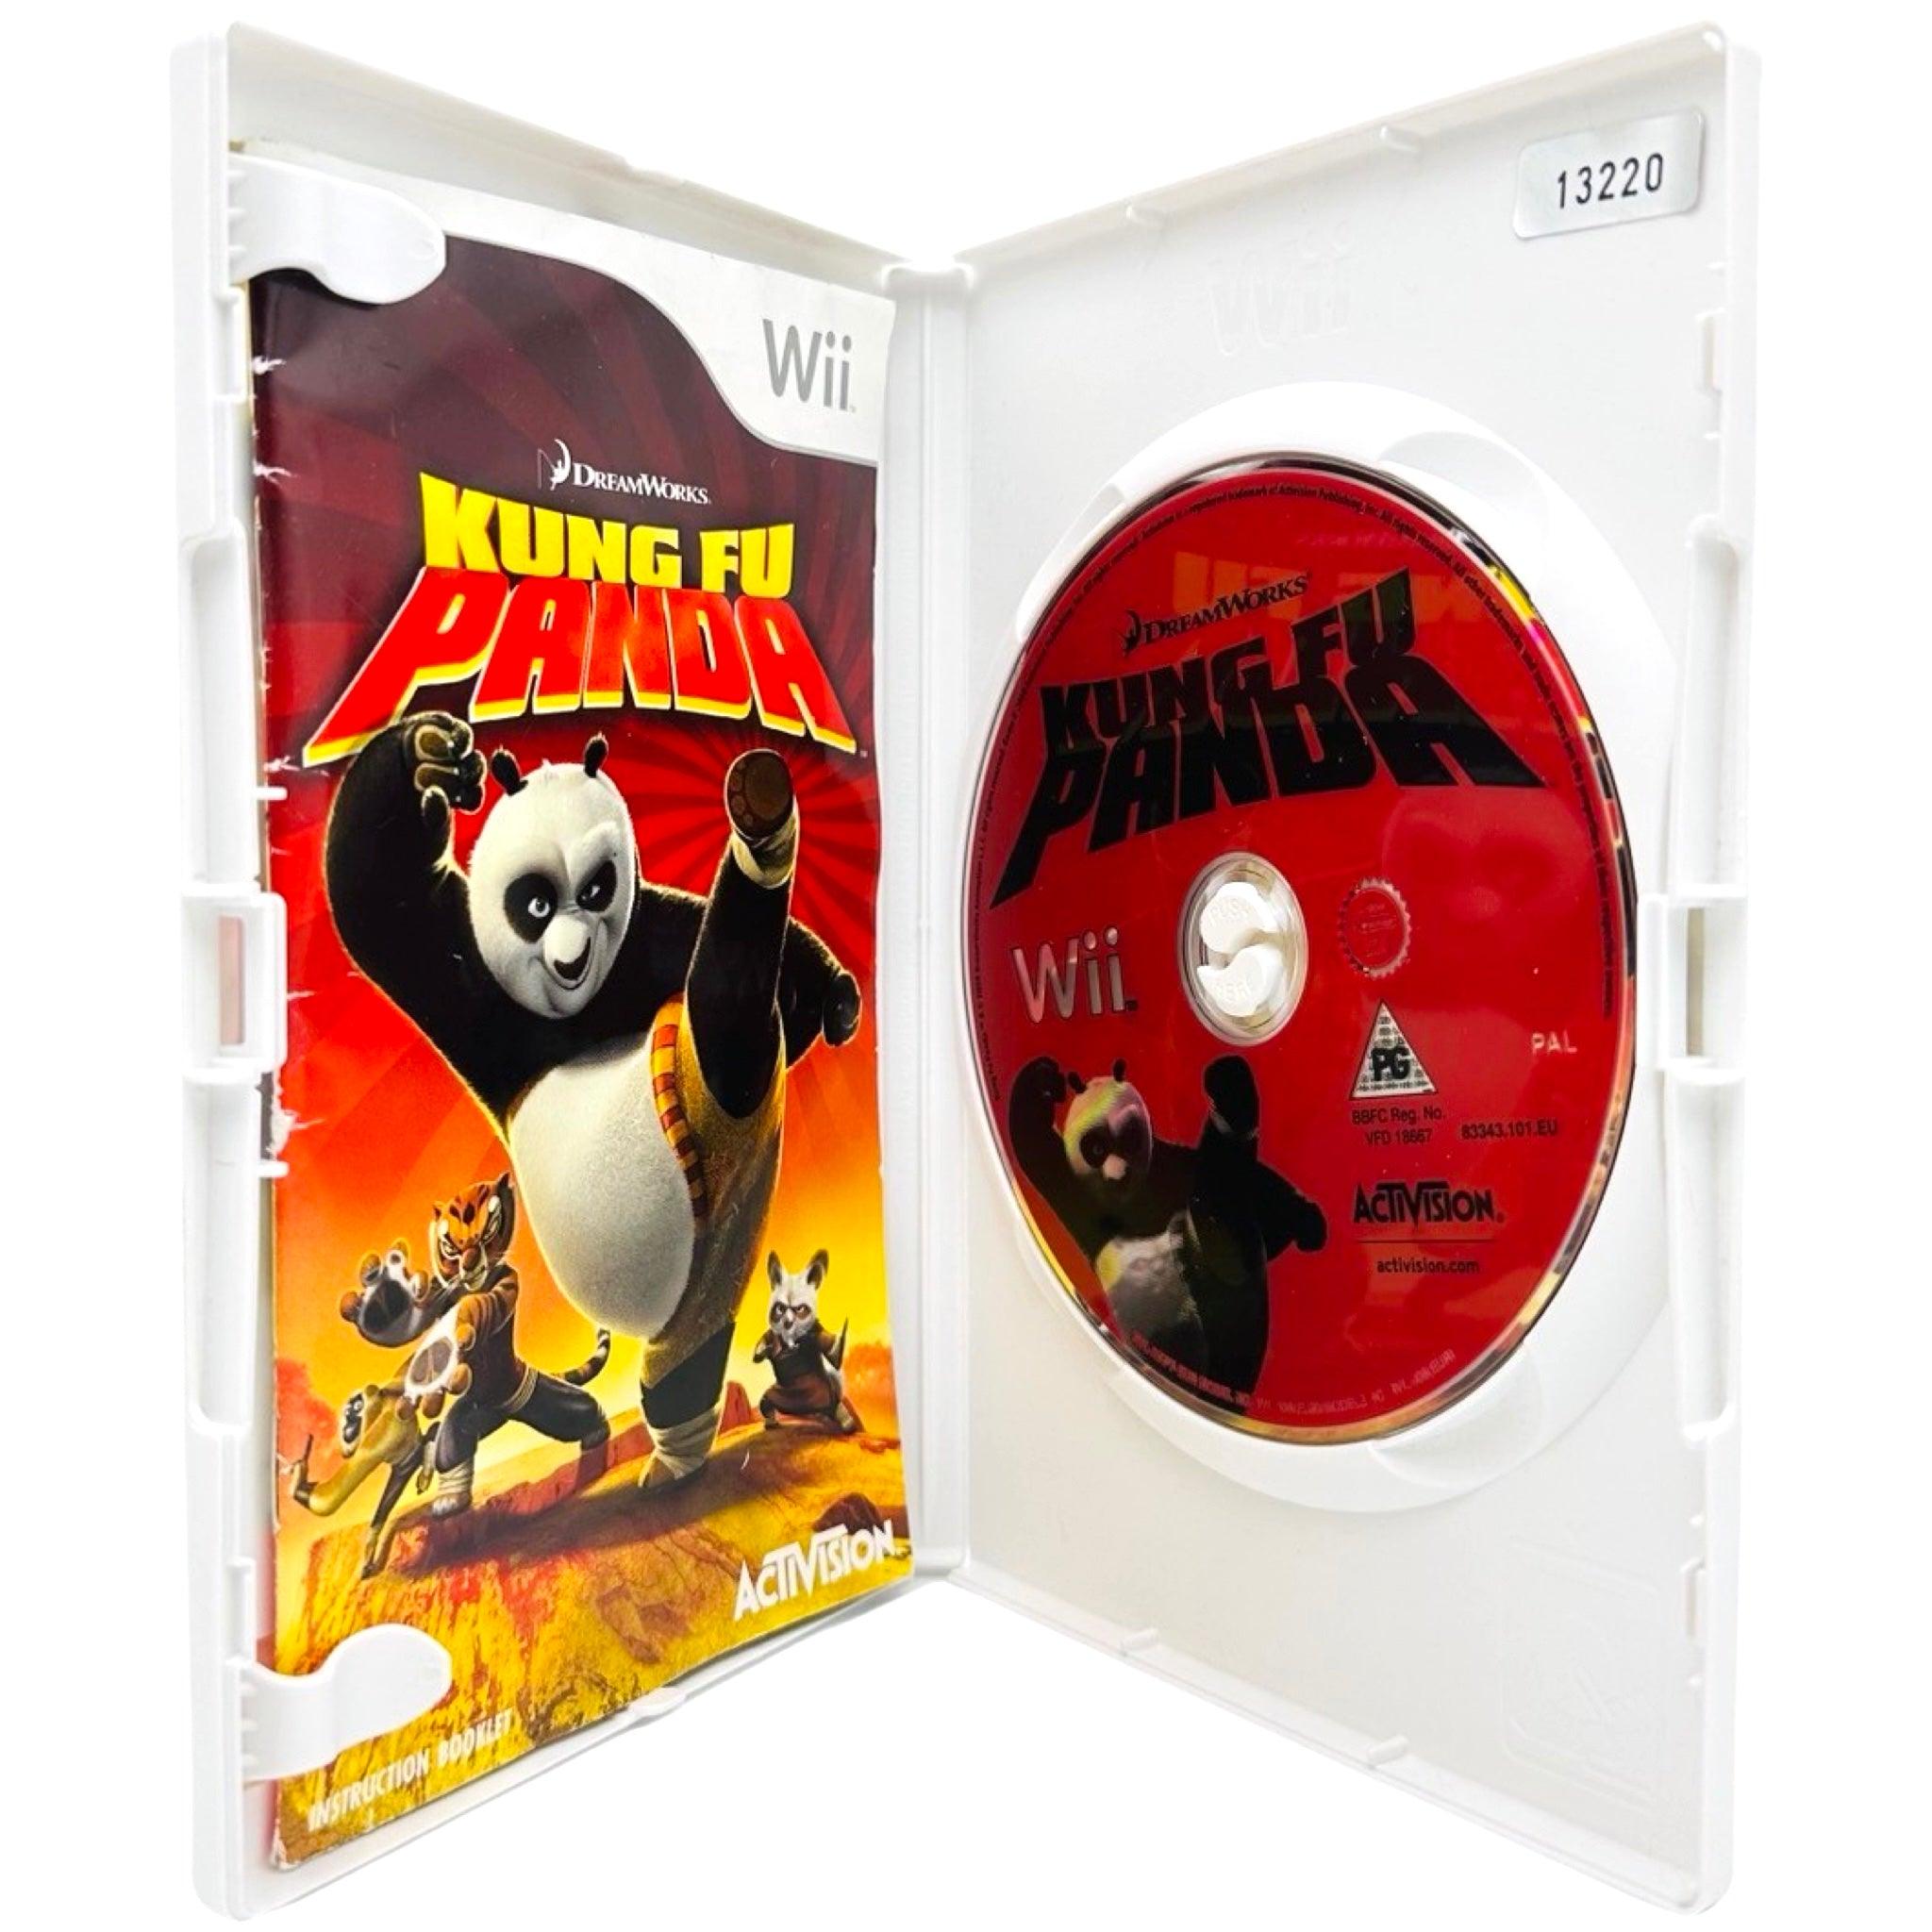 Wii: Kung Fu Panda - RetroGaming.no